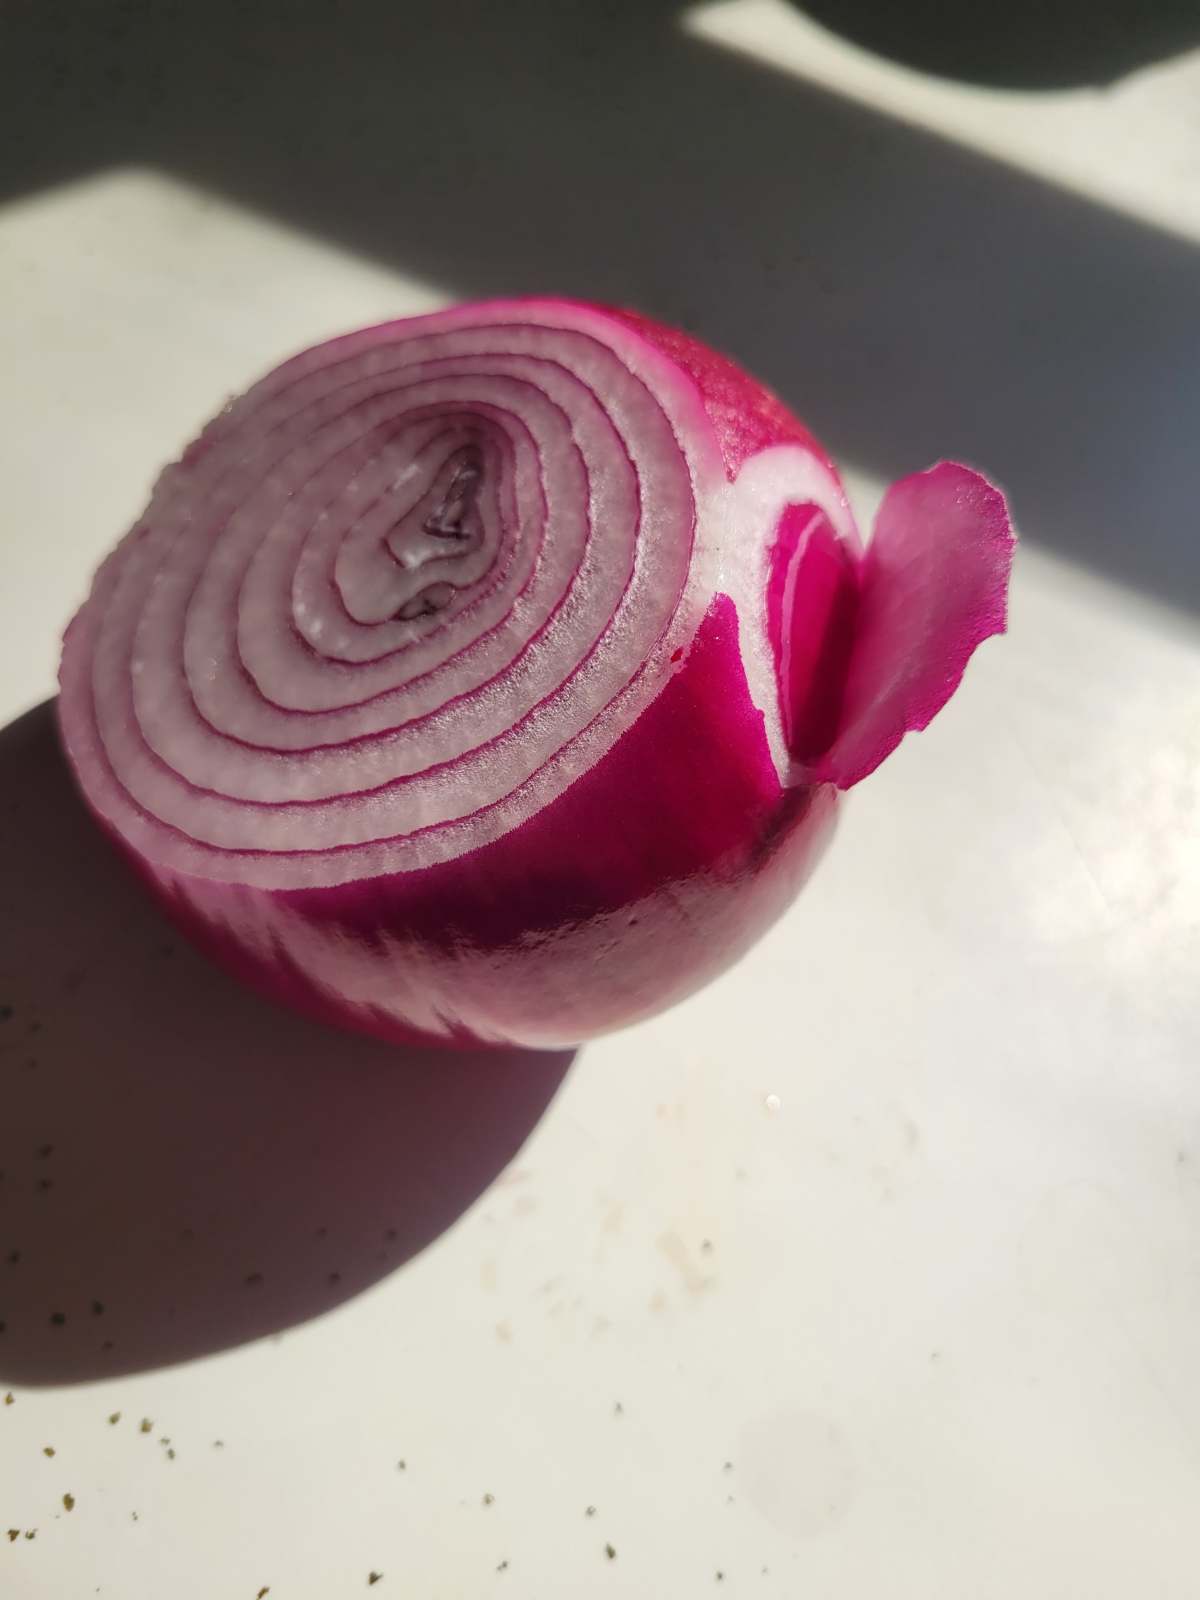 How’s Your Onion/AKA LIFE?